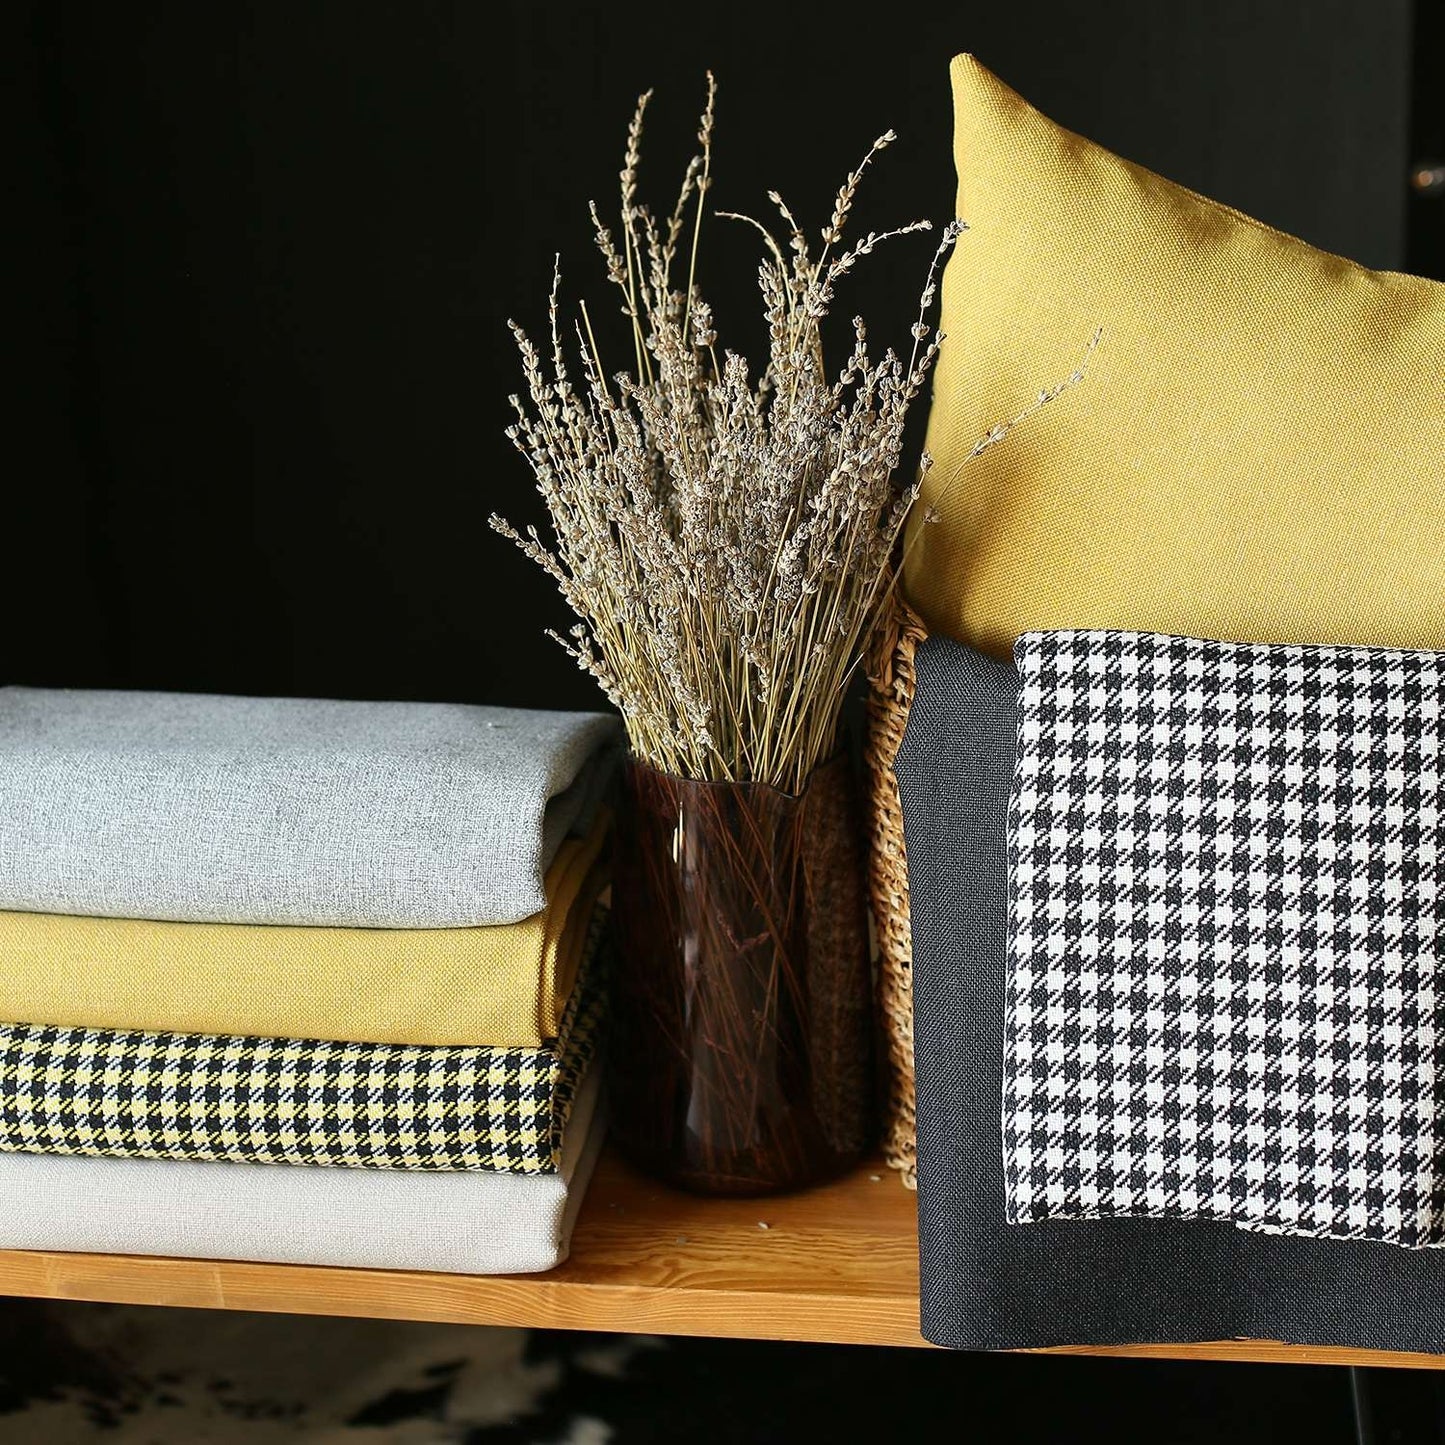 Set Of 4 Yellow And Black Lumbar Pillow Covers